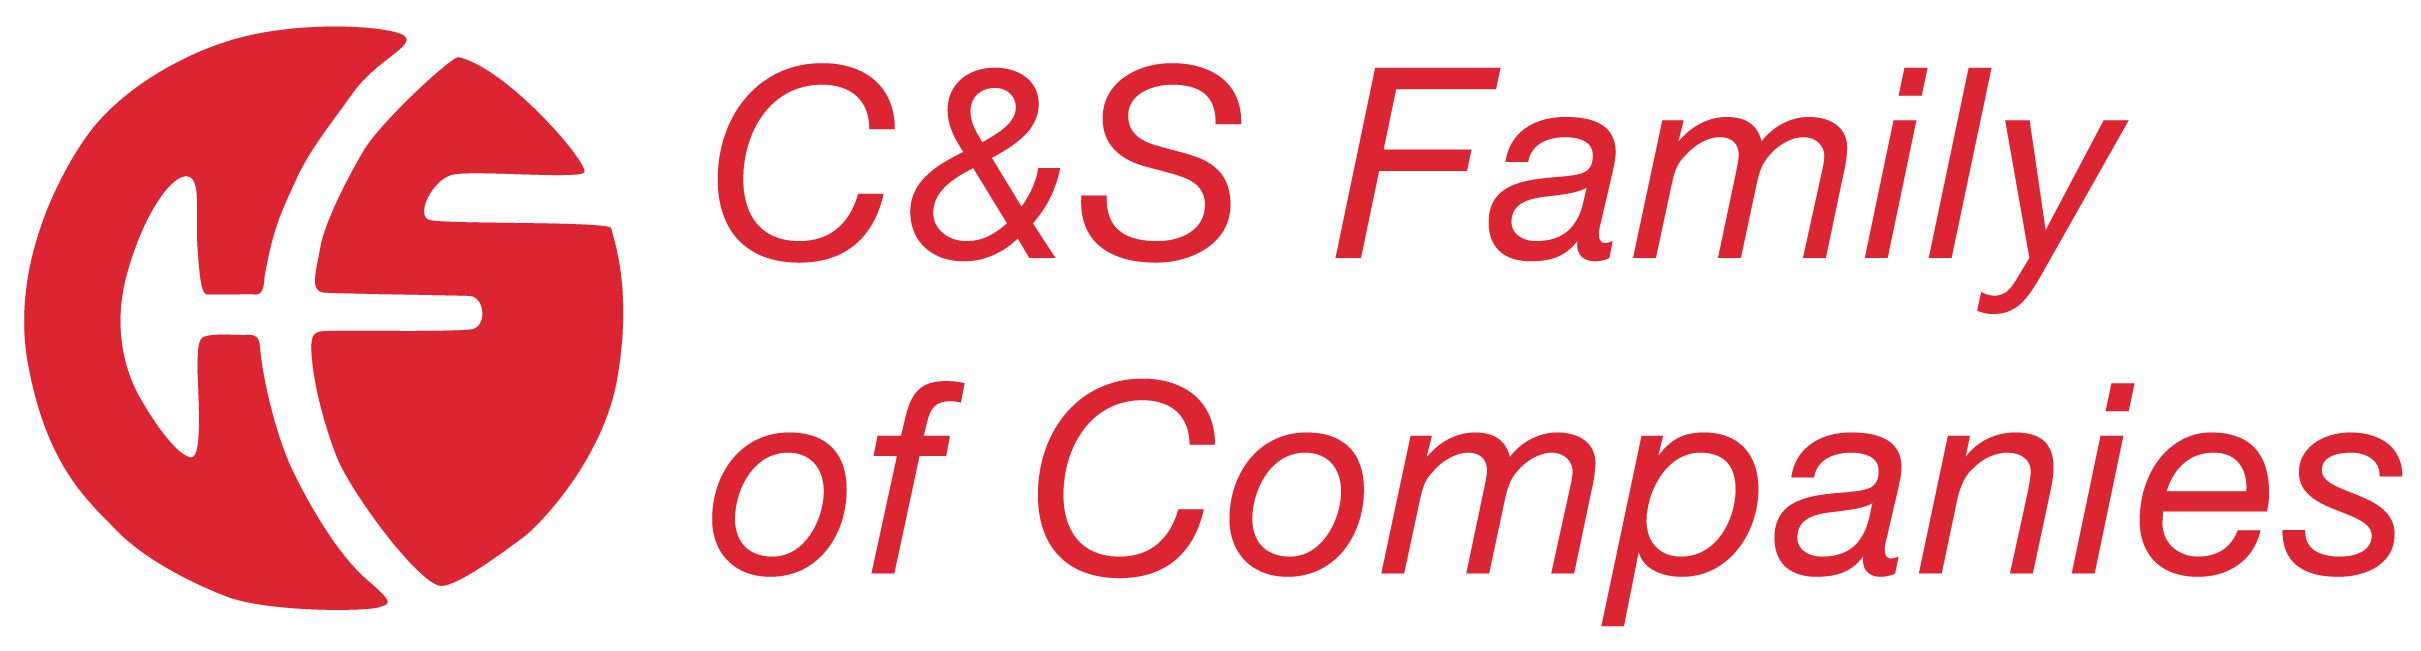 C&S Family of Companies logo